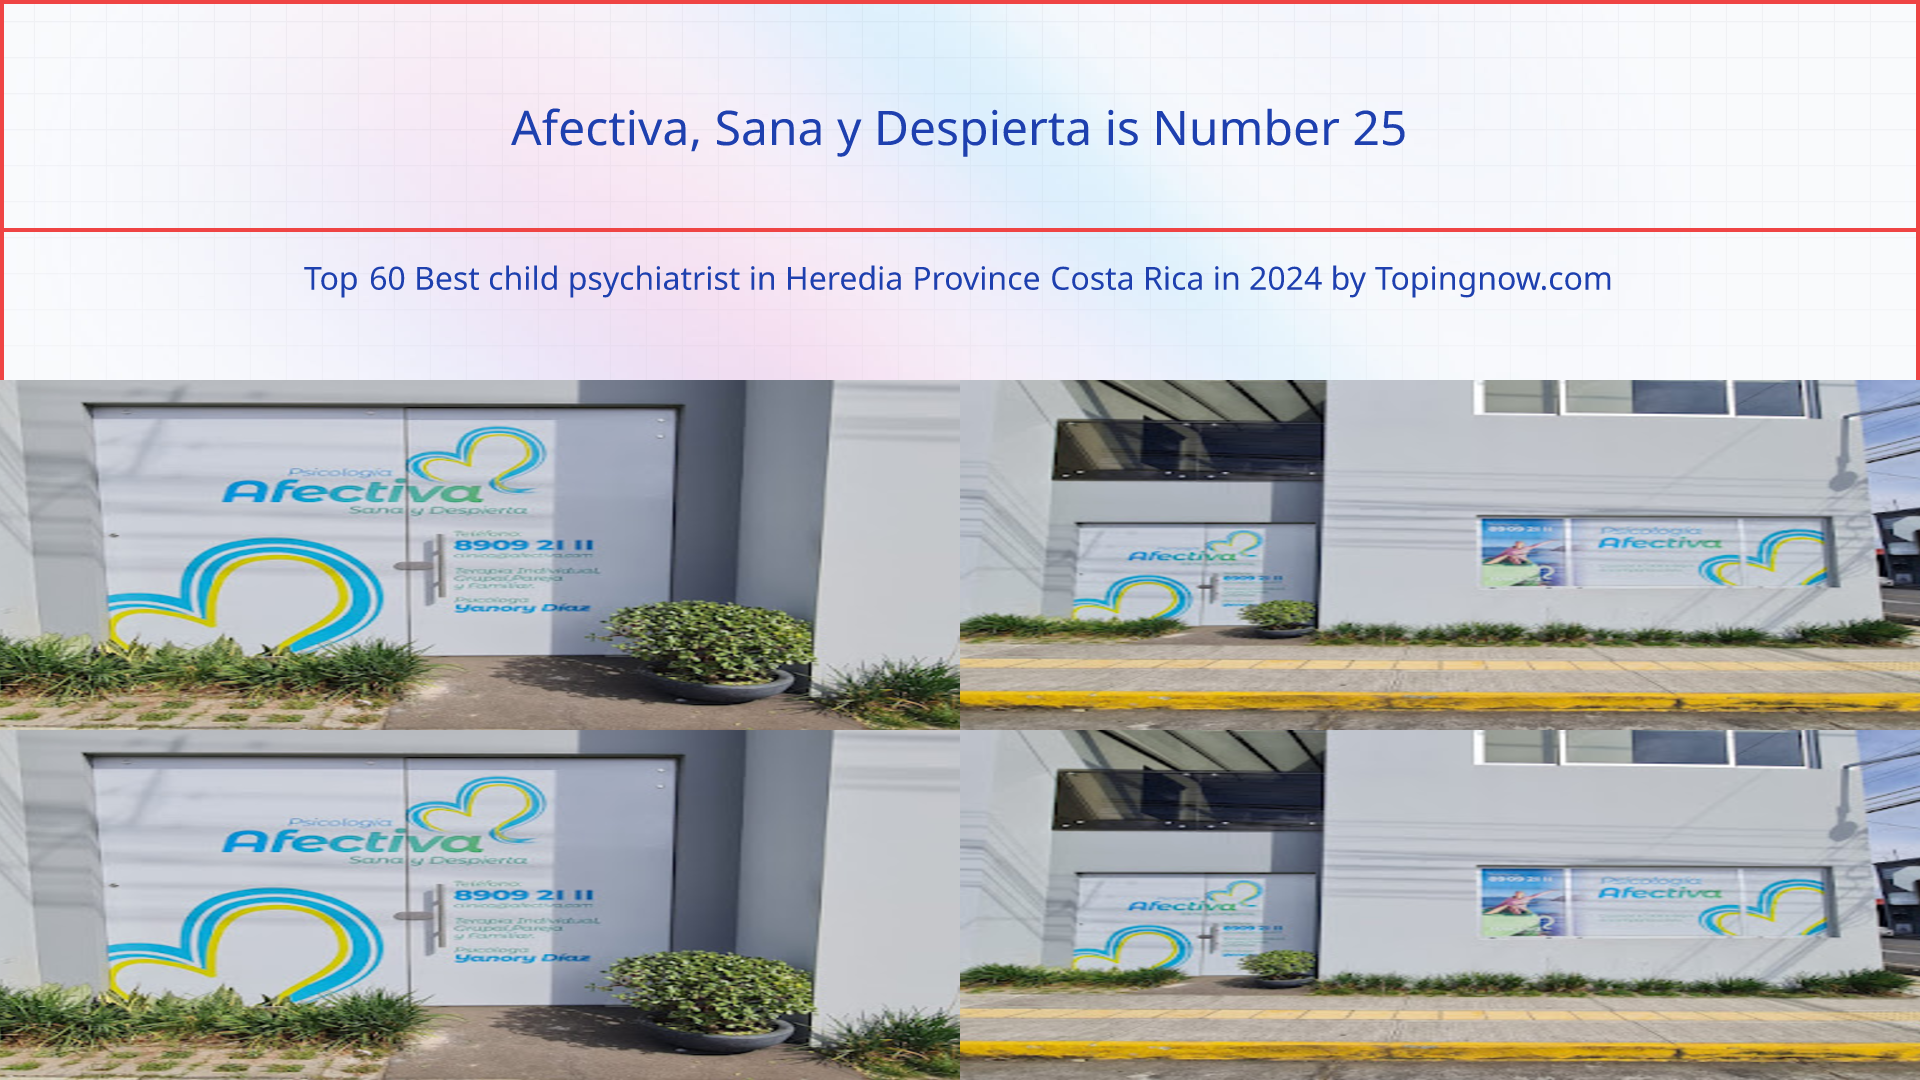 Afectiva, Sana y Despierta: Top 60 Best child psychiatrist in Heredia Province Costa Rica in 2024